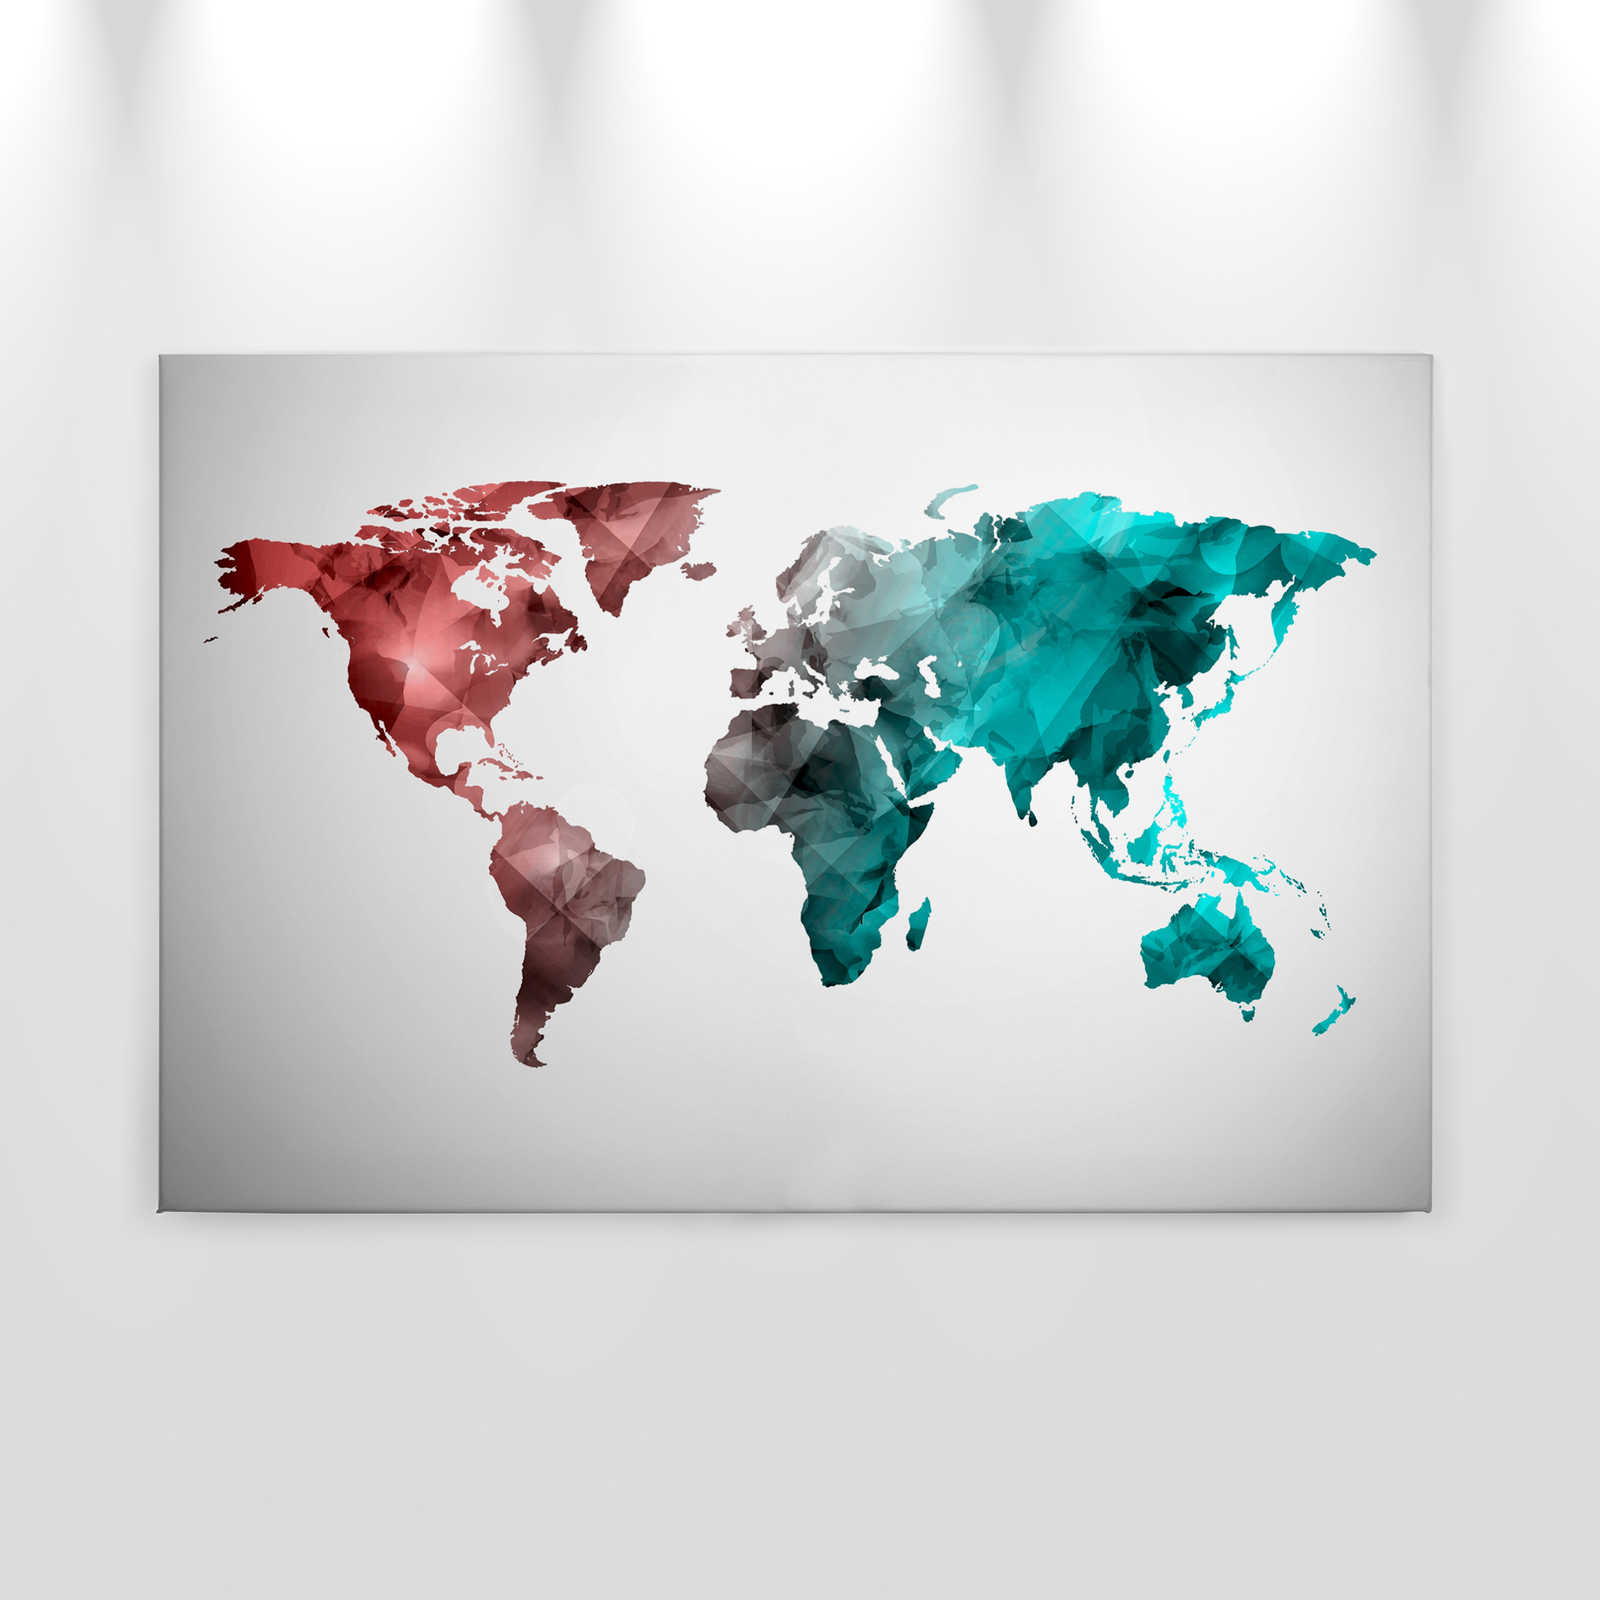             Lienzo con mapamundi de elementos gráficos | WorldGrafic 2 - 0,90 m x 0,60 m
        